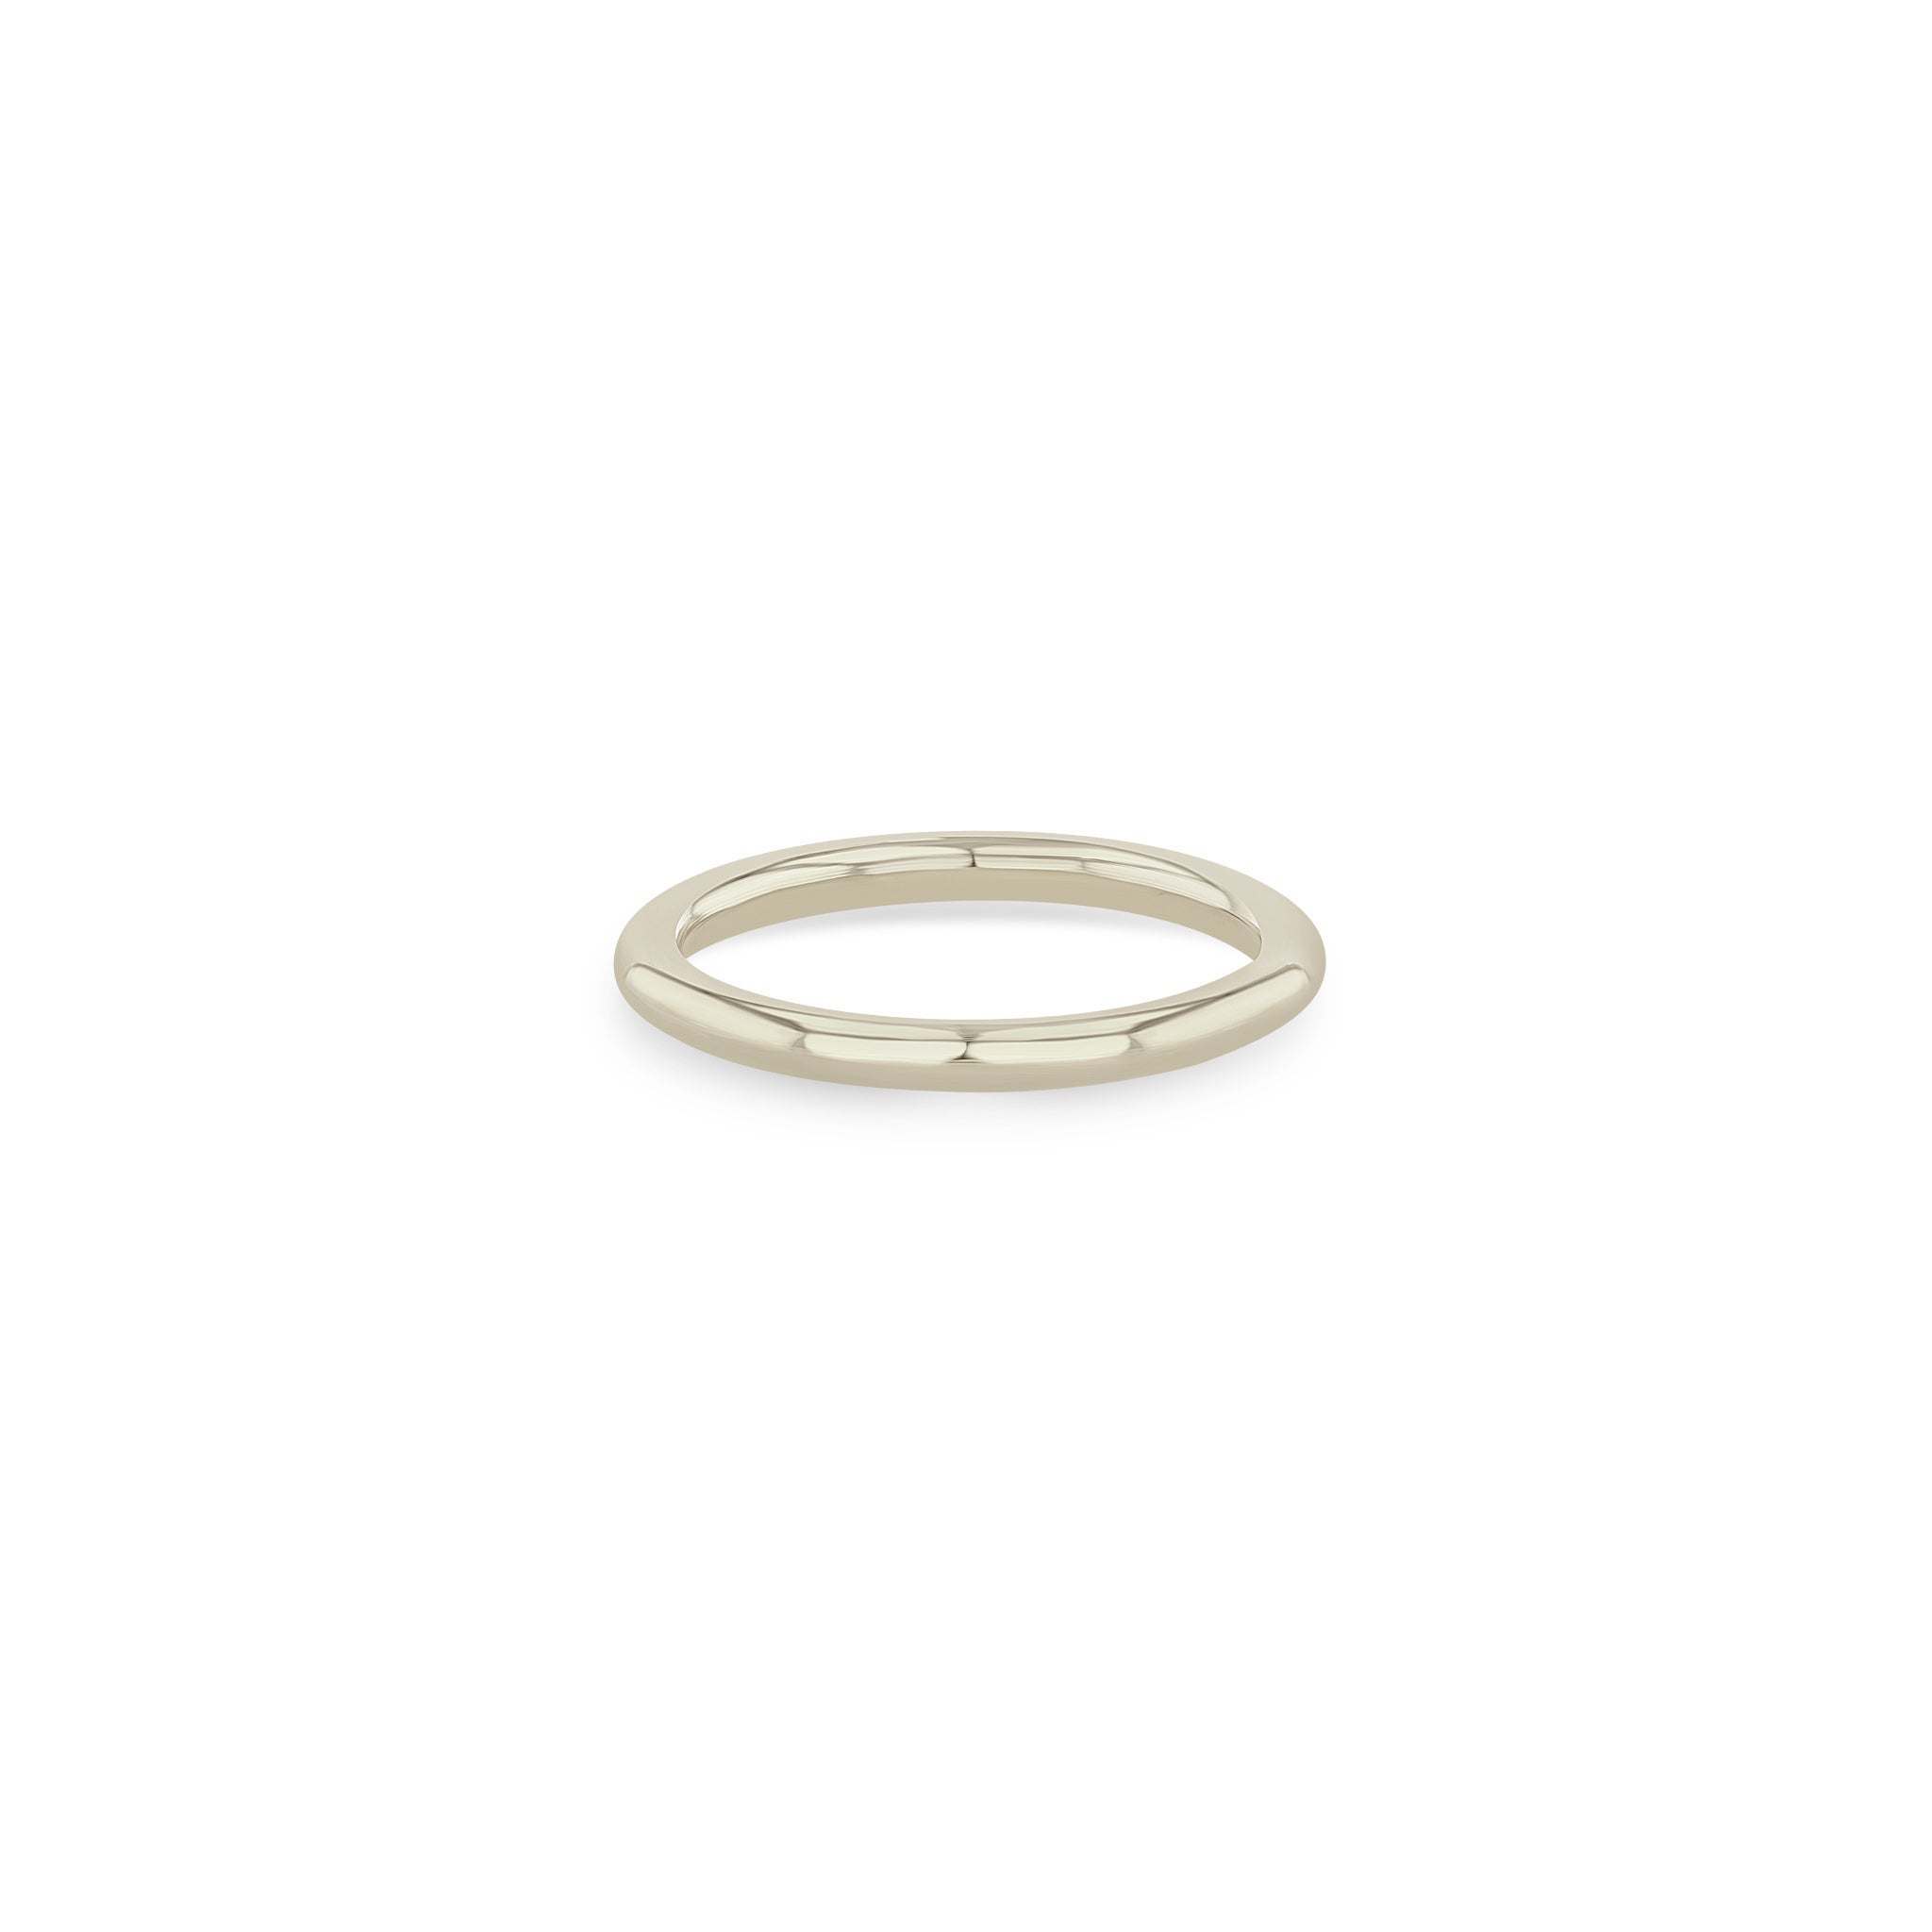 Gold Band Ring